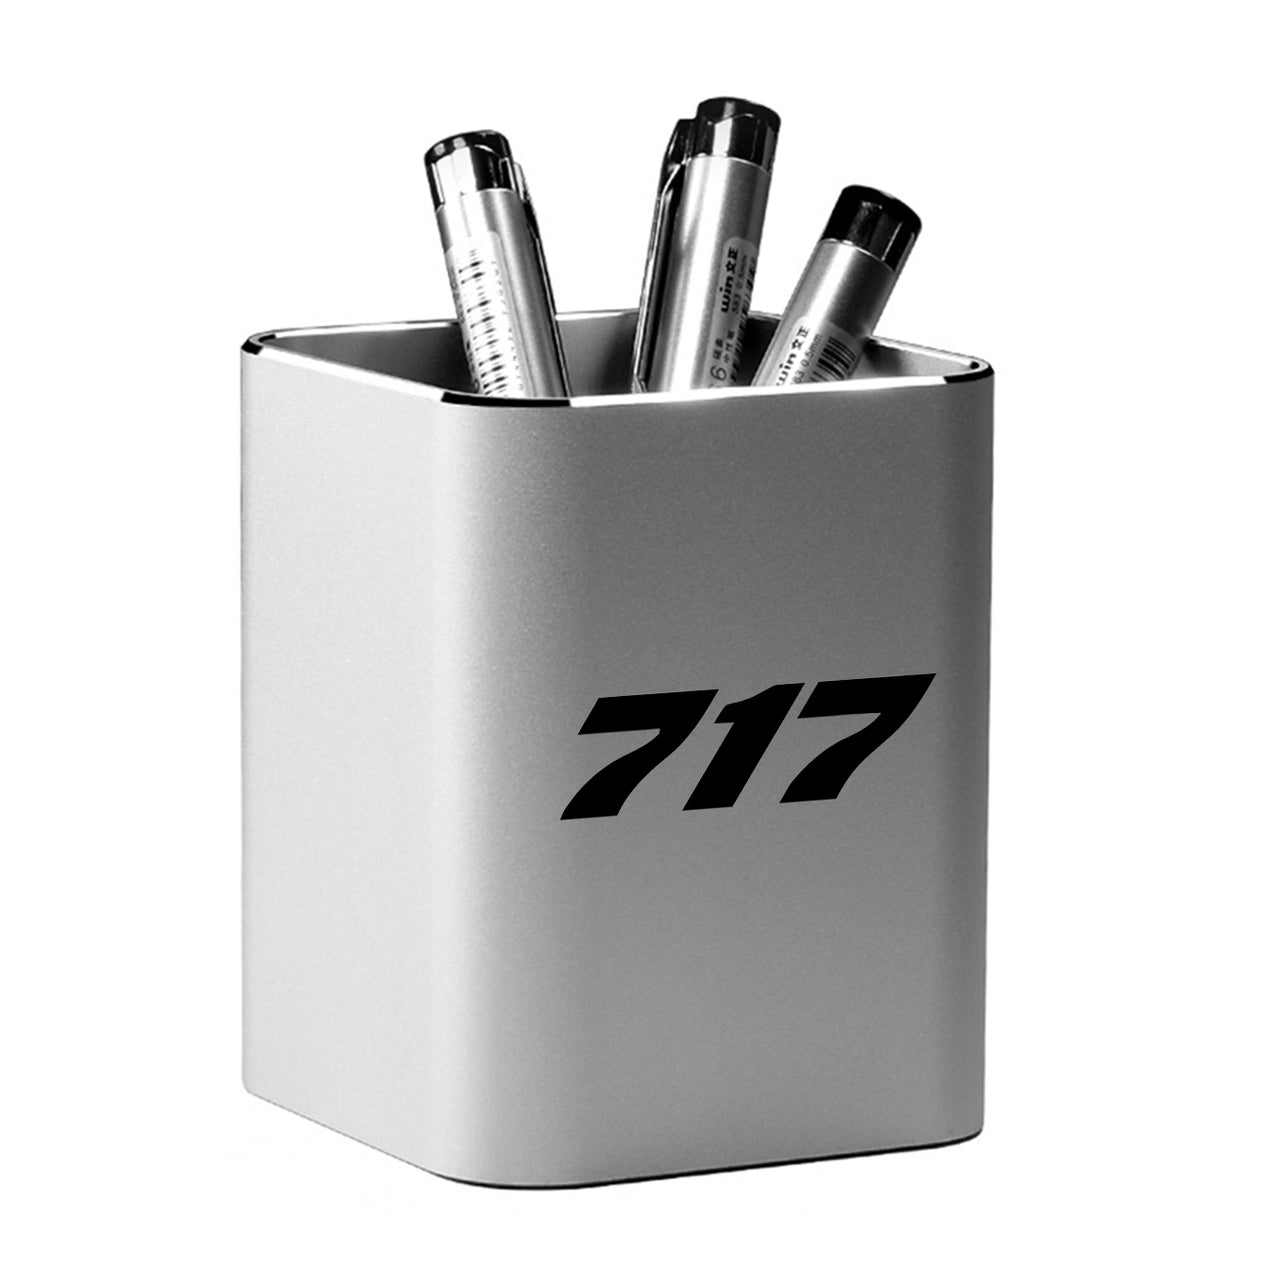 717 Flat Text Designed Aluminium Alloy Pen Holders